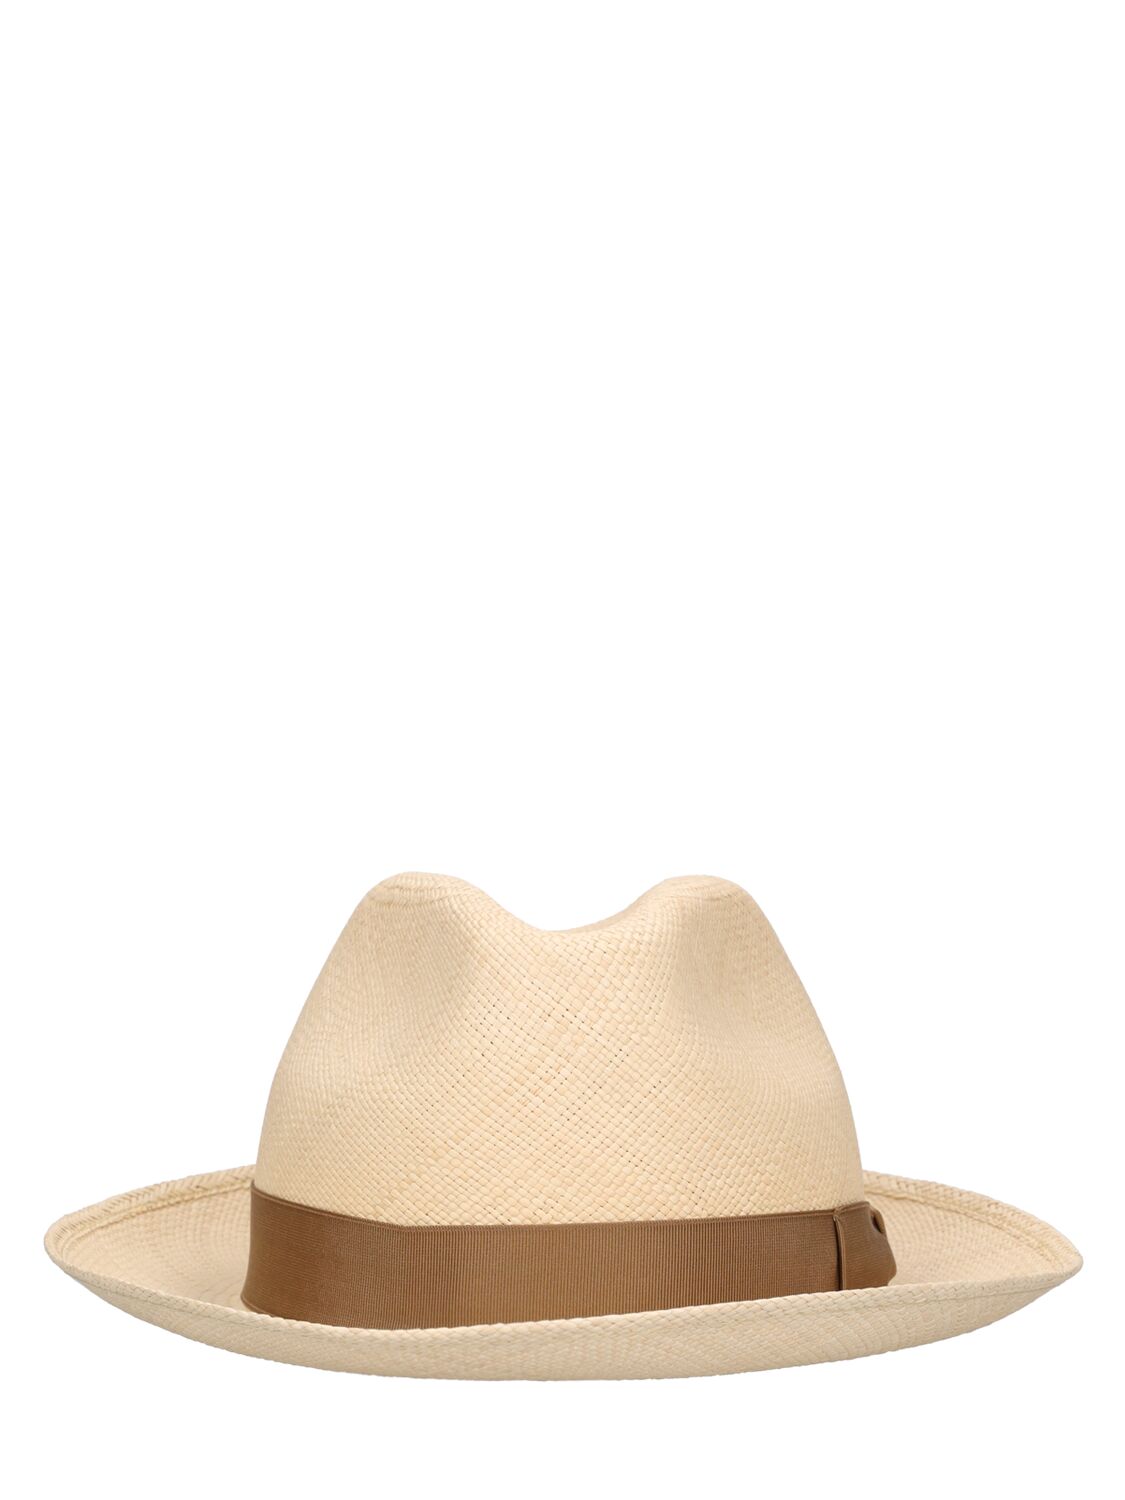 Borsalino Federico 6cm Brim Straw Panama Hat In Natural,camel